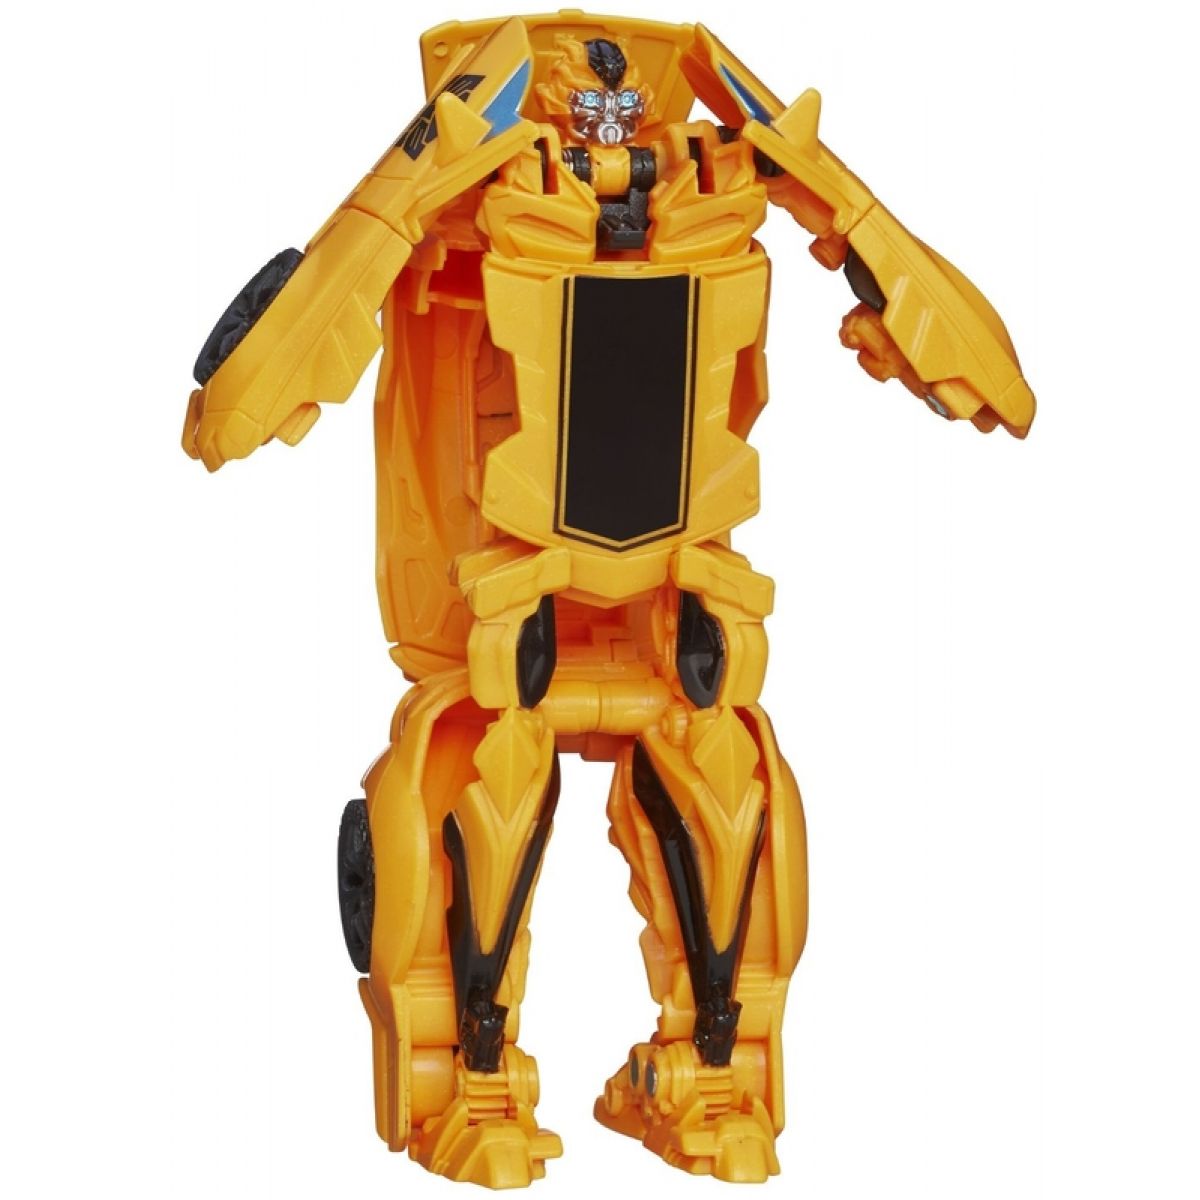 Transformers 4 Transformace v 1 kroku - Bumblebee